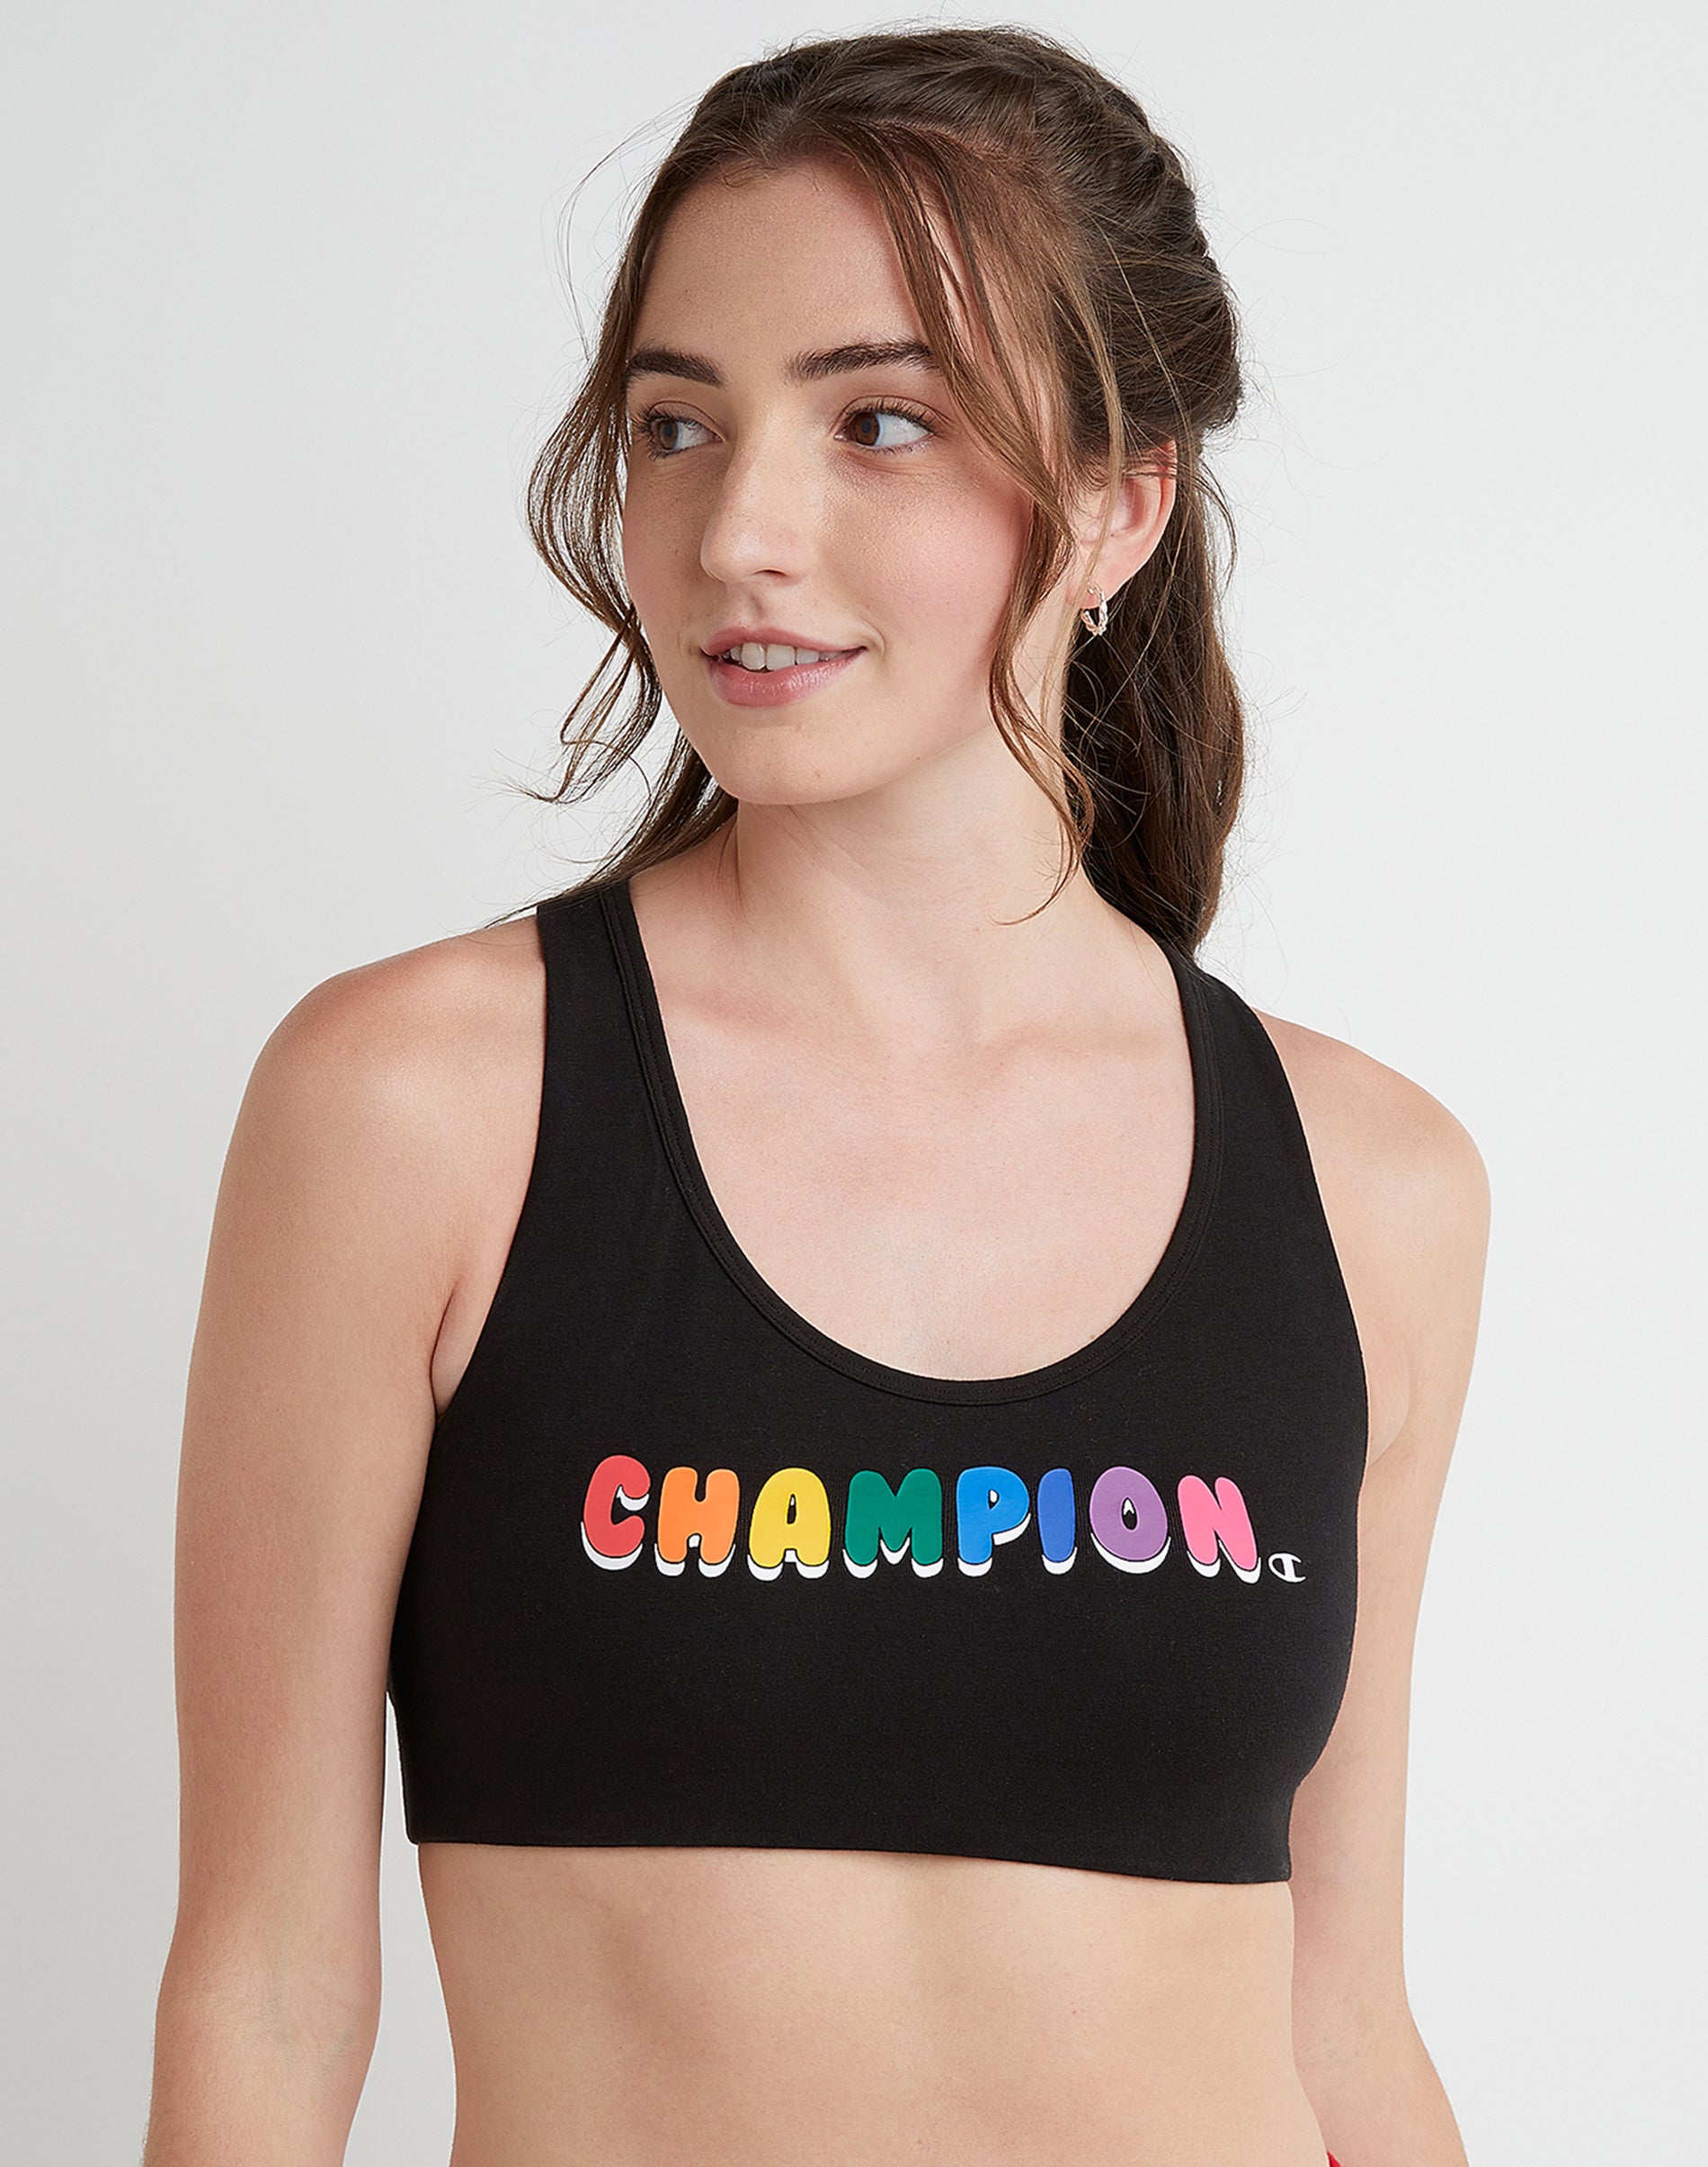 Women's Sports Bras & Bralettes, Champion